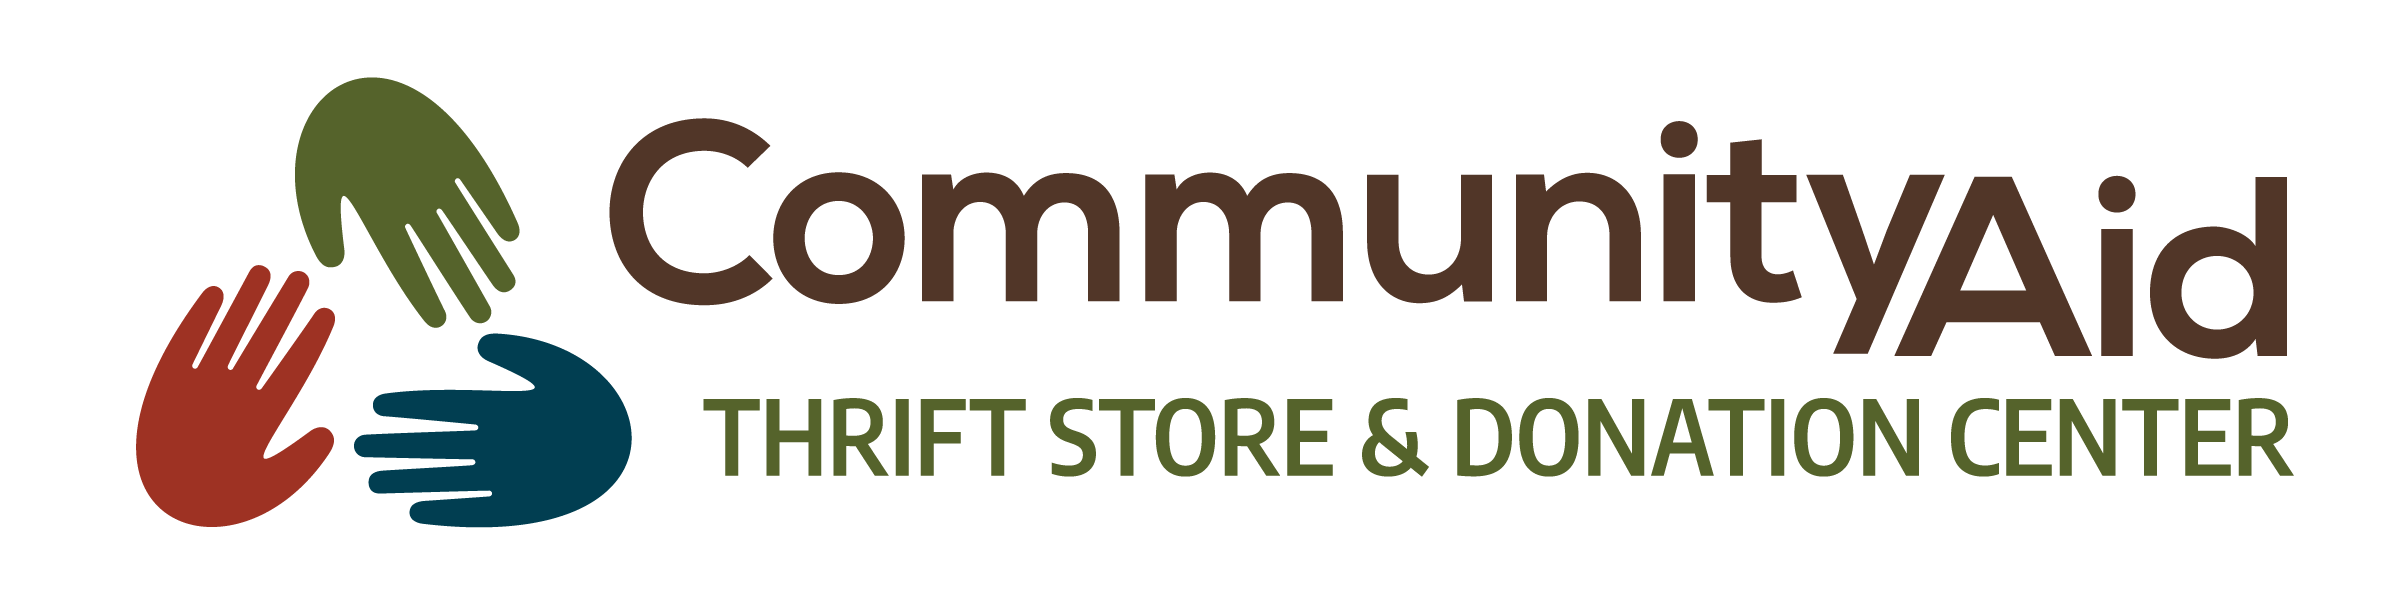 communityaid thrift store and donation center logo